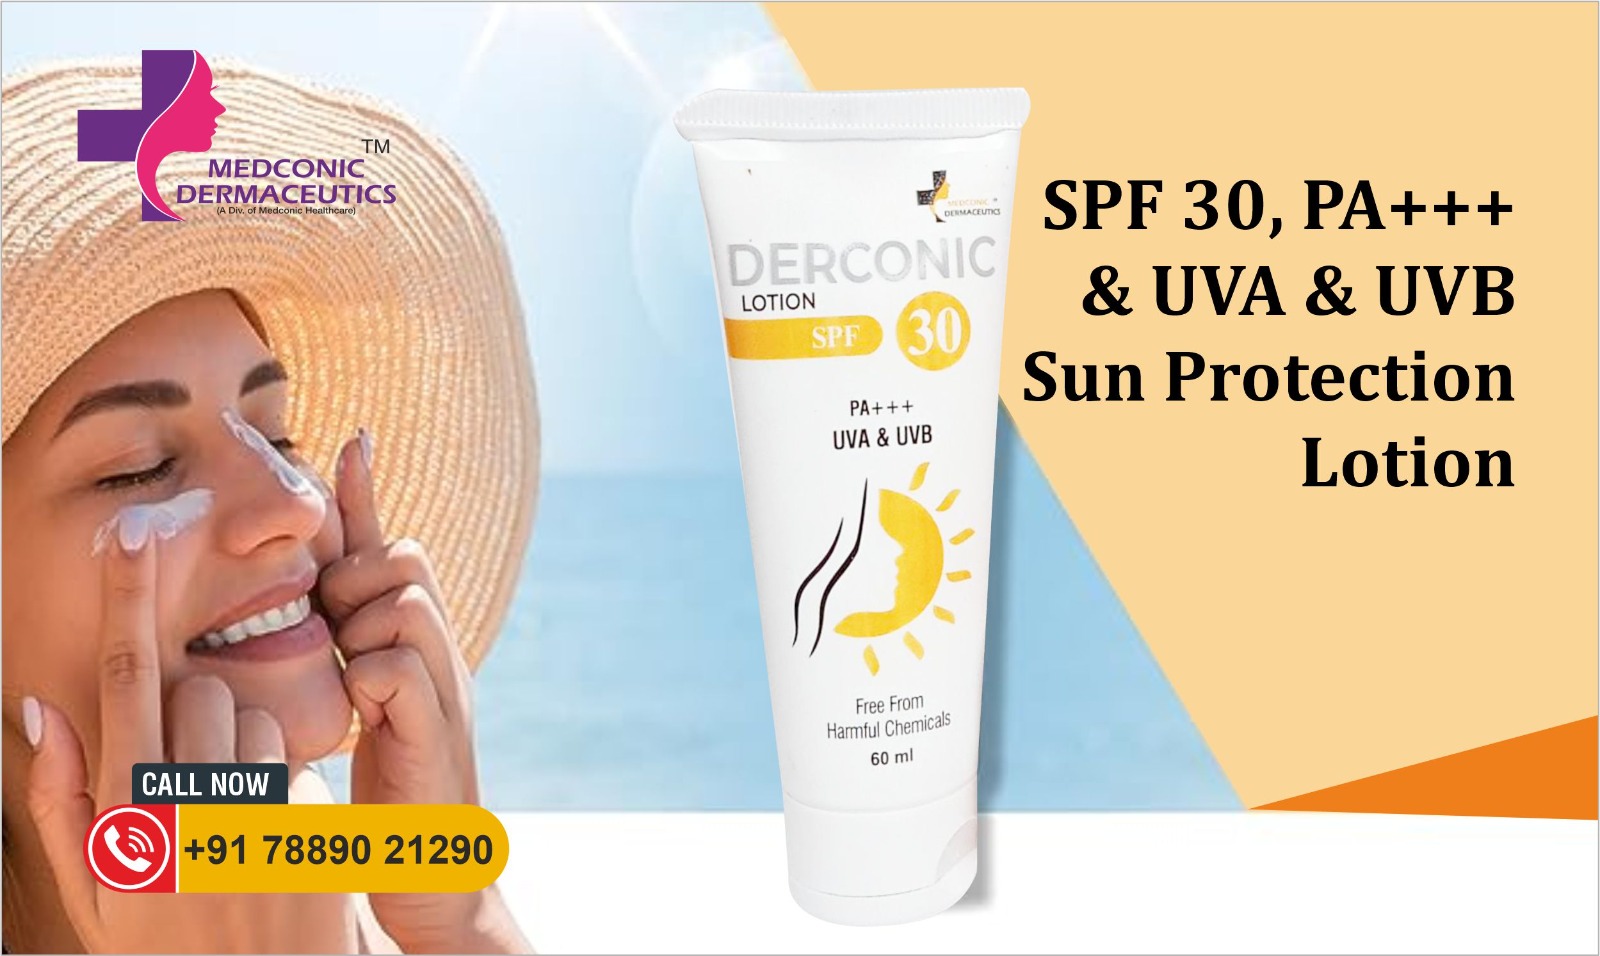 SPF 30, PA+++ & UVA & UVB Sun Protection Lotion